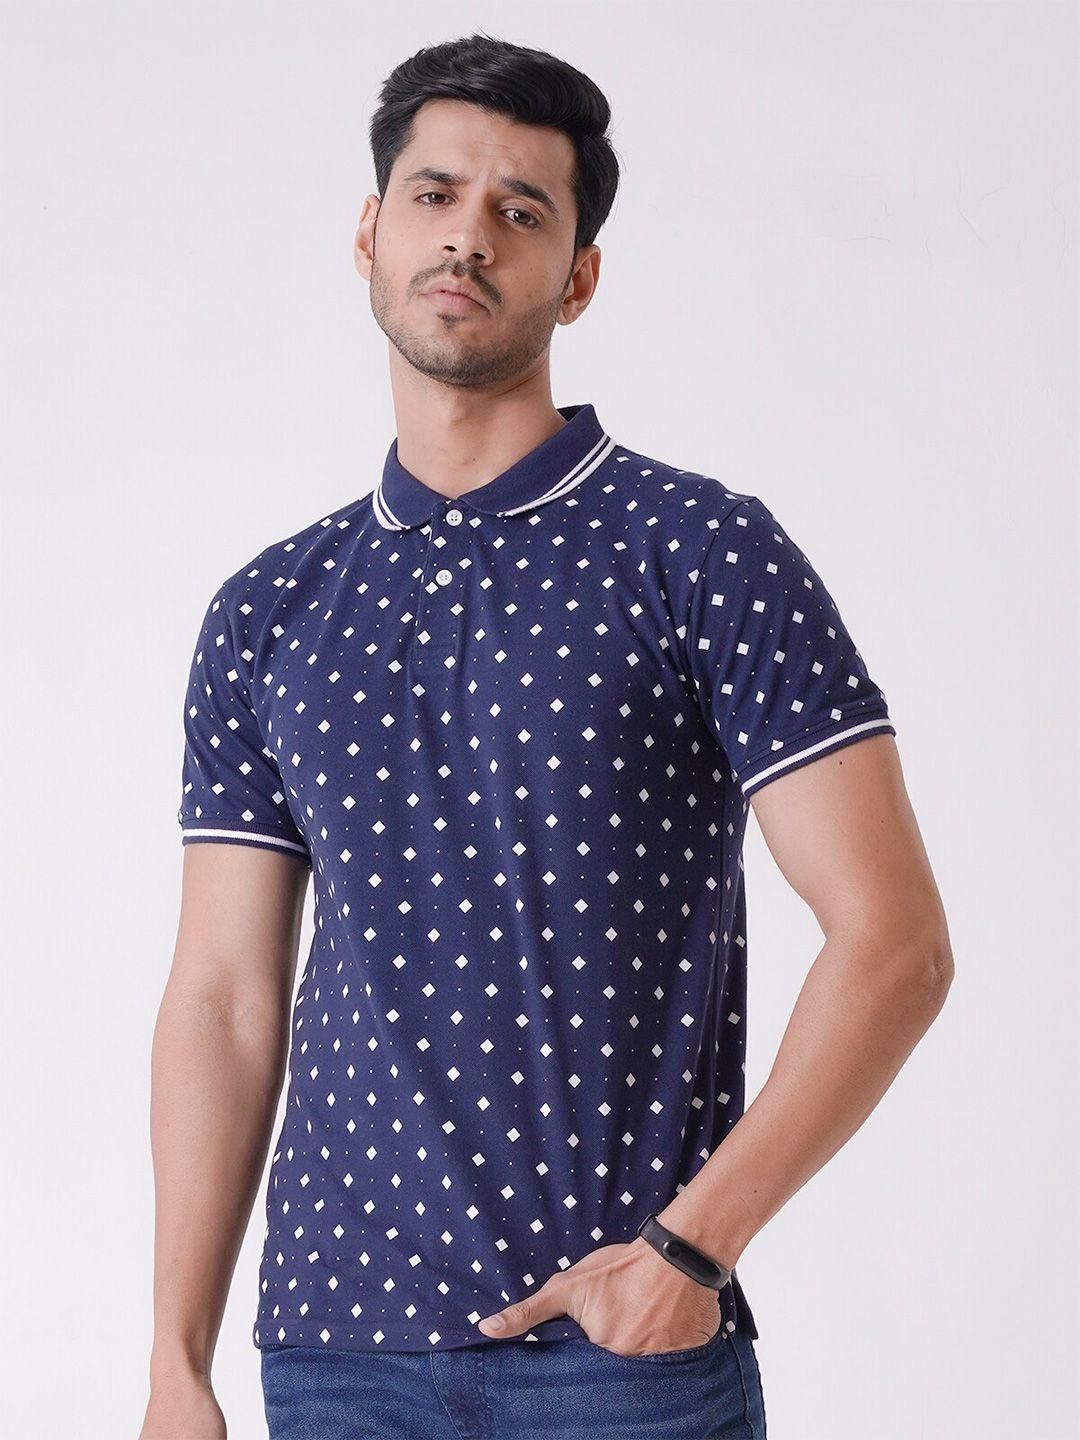 urbanmark-polka-dot-printed-polo-collar-casual-t-shirt